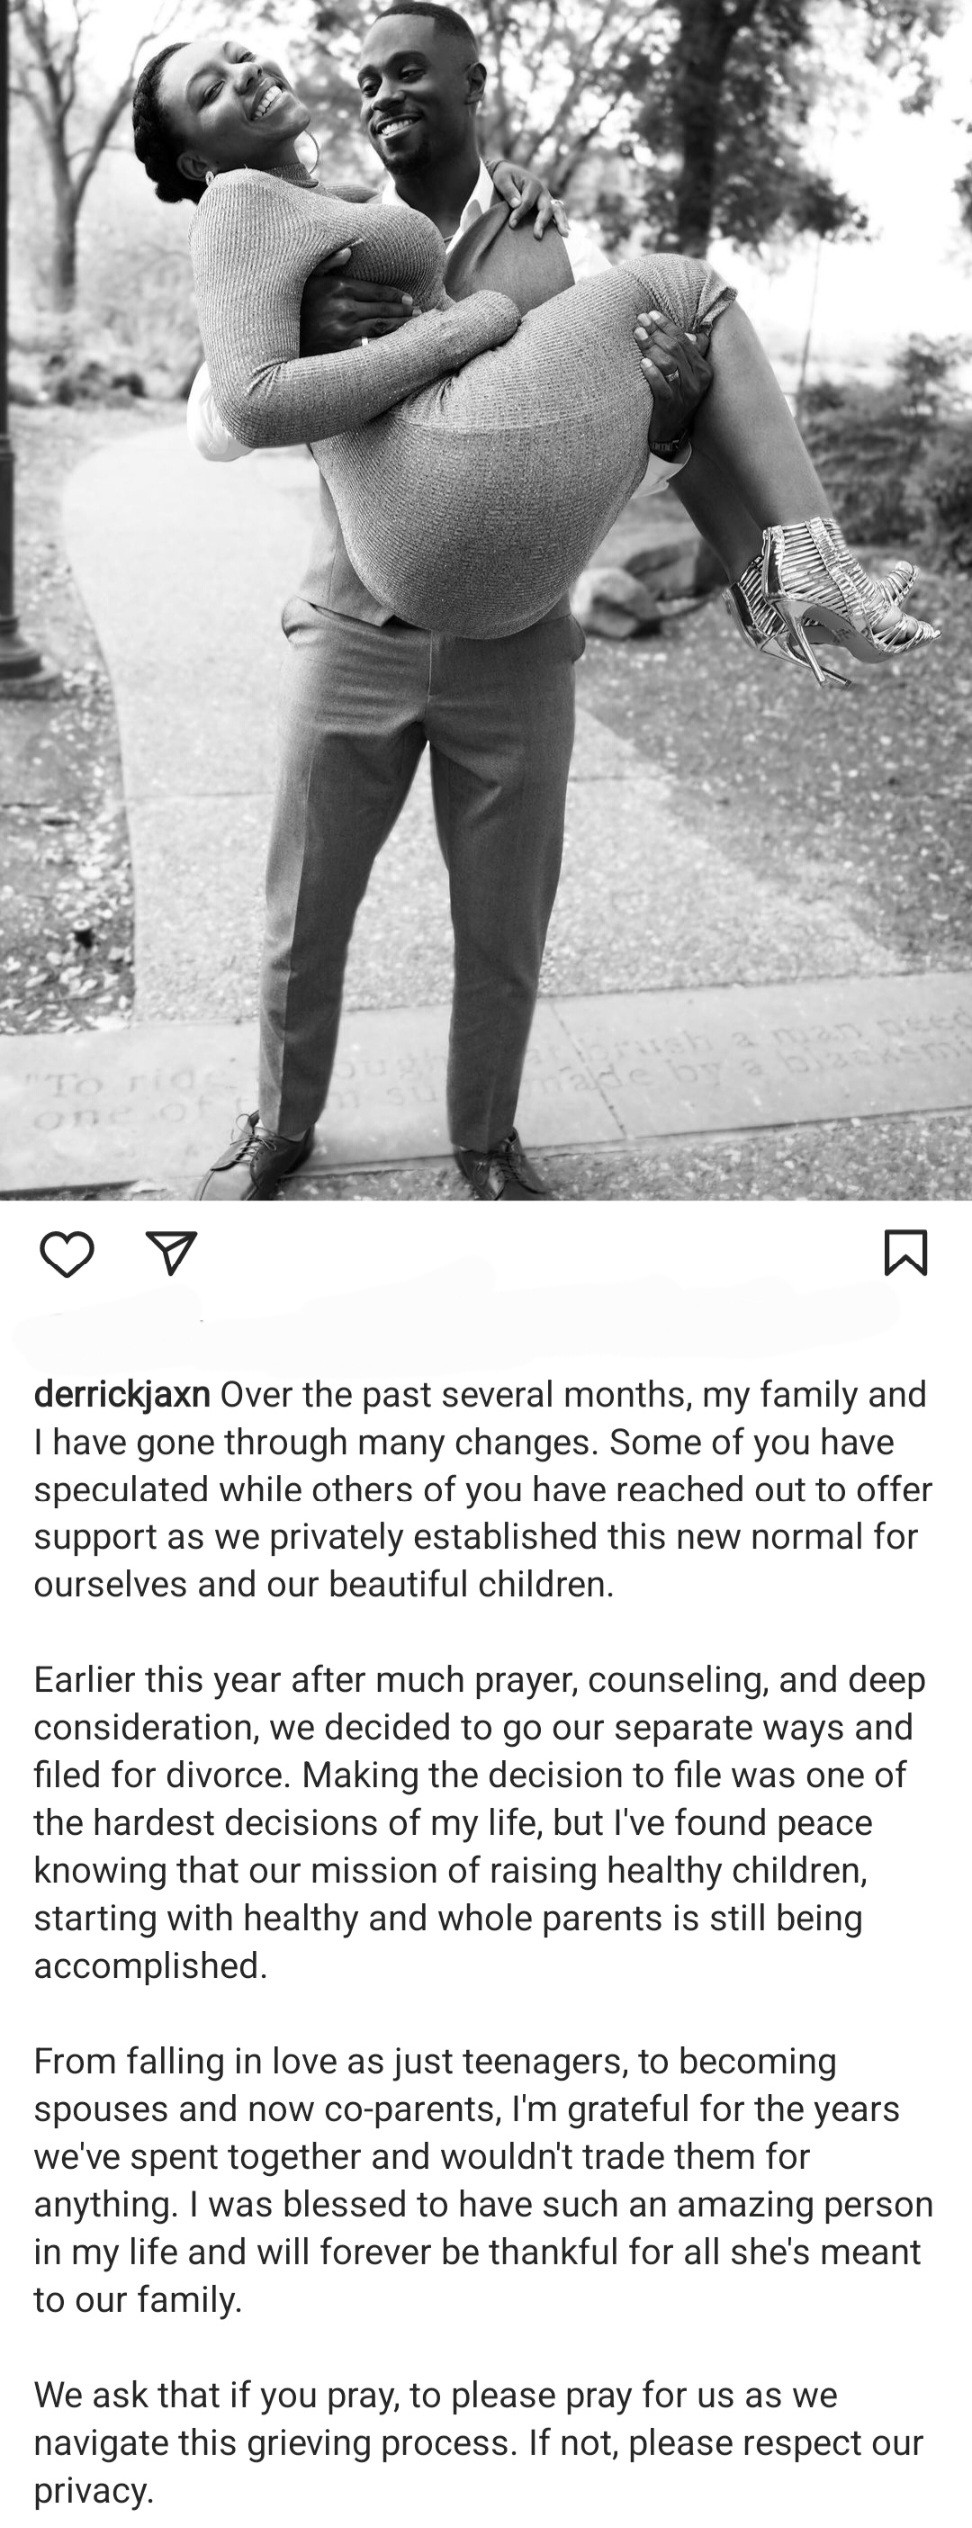 Relationship guru, Derrick Jaxn announces divorce from wife Da'Naia